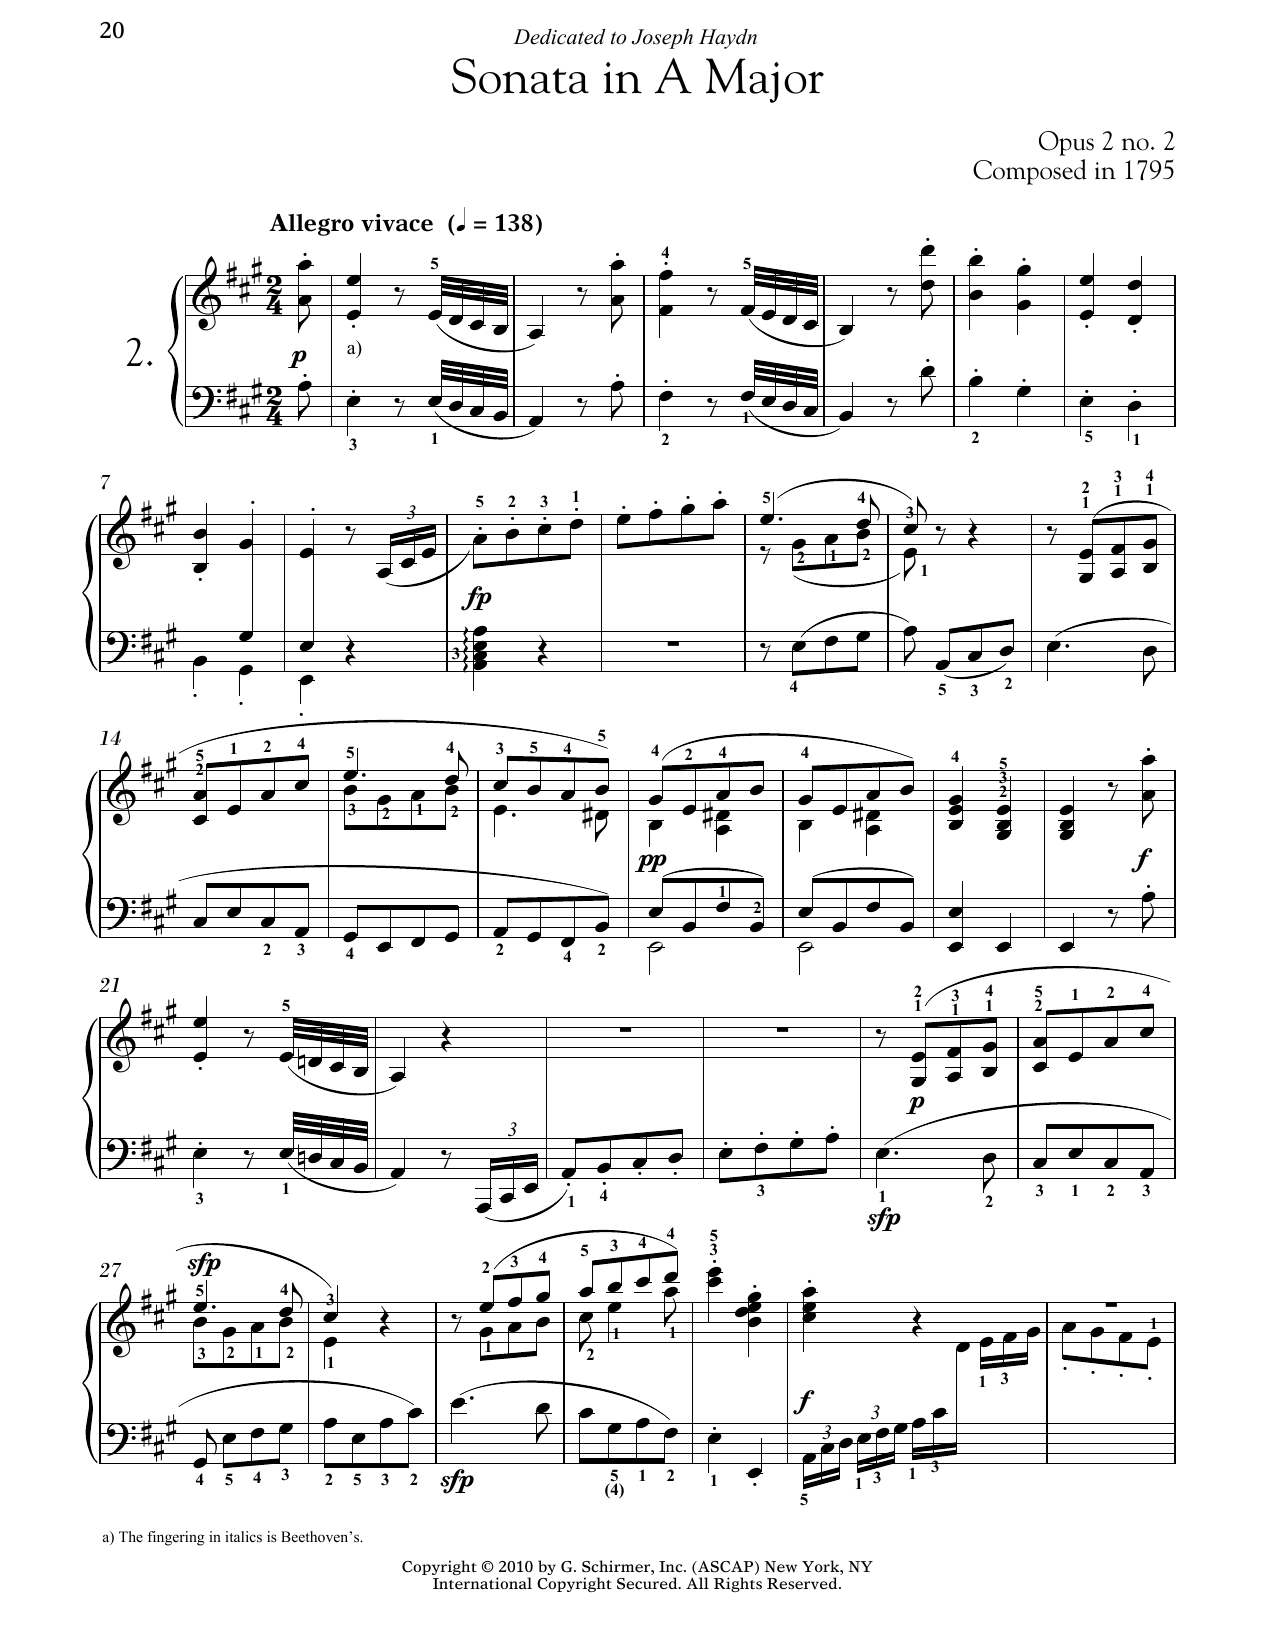 Ludwig van Beethoven Piano Sonata No. 2 In A Major, Op. 2, No. 2 Sheet Music Notes & Chords for Piano - Download or Print PDF